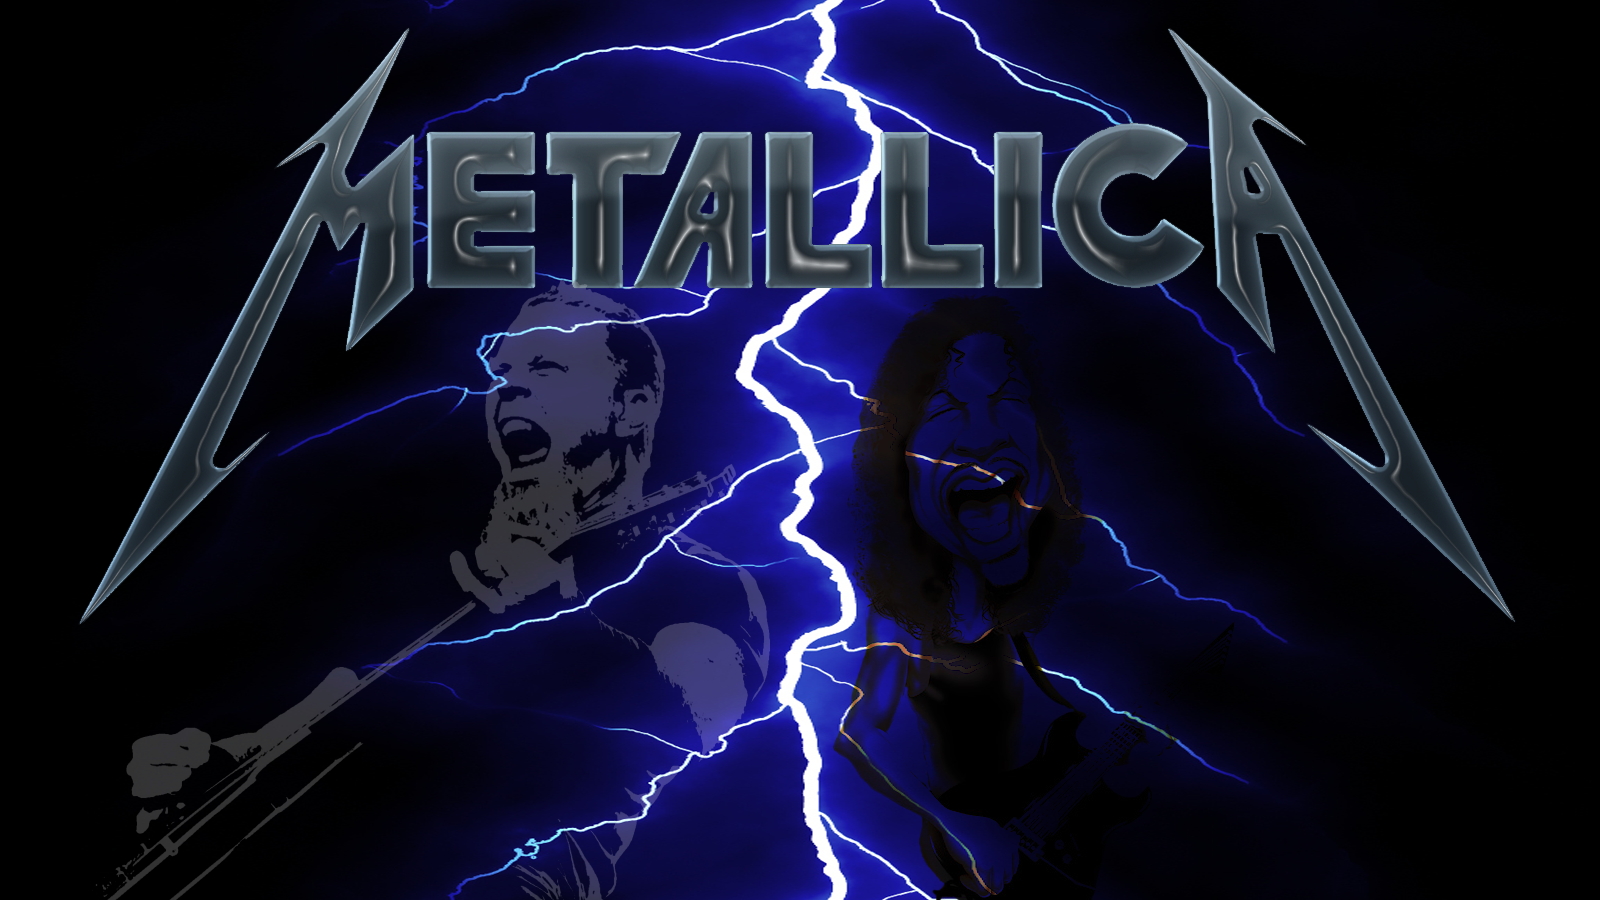  Metallica HQ Background Images